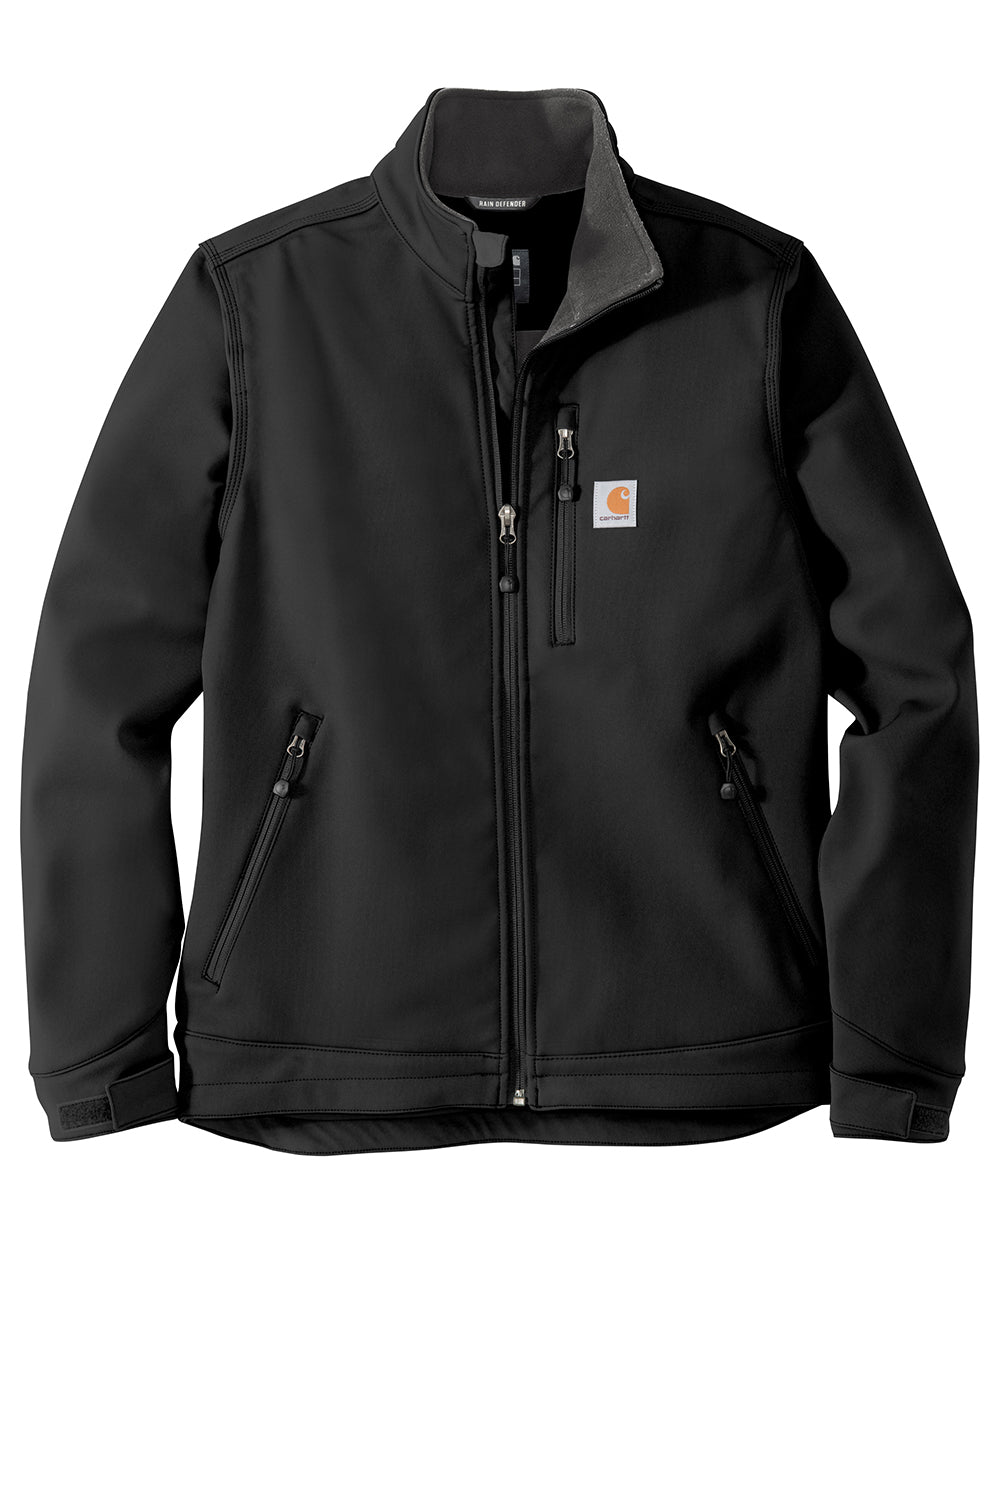 Carhartt CT102199 Mens Crowley Wind & Water Resistant Full Zip Jacket Black Flat Front